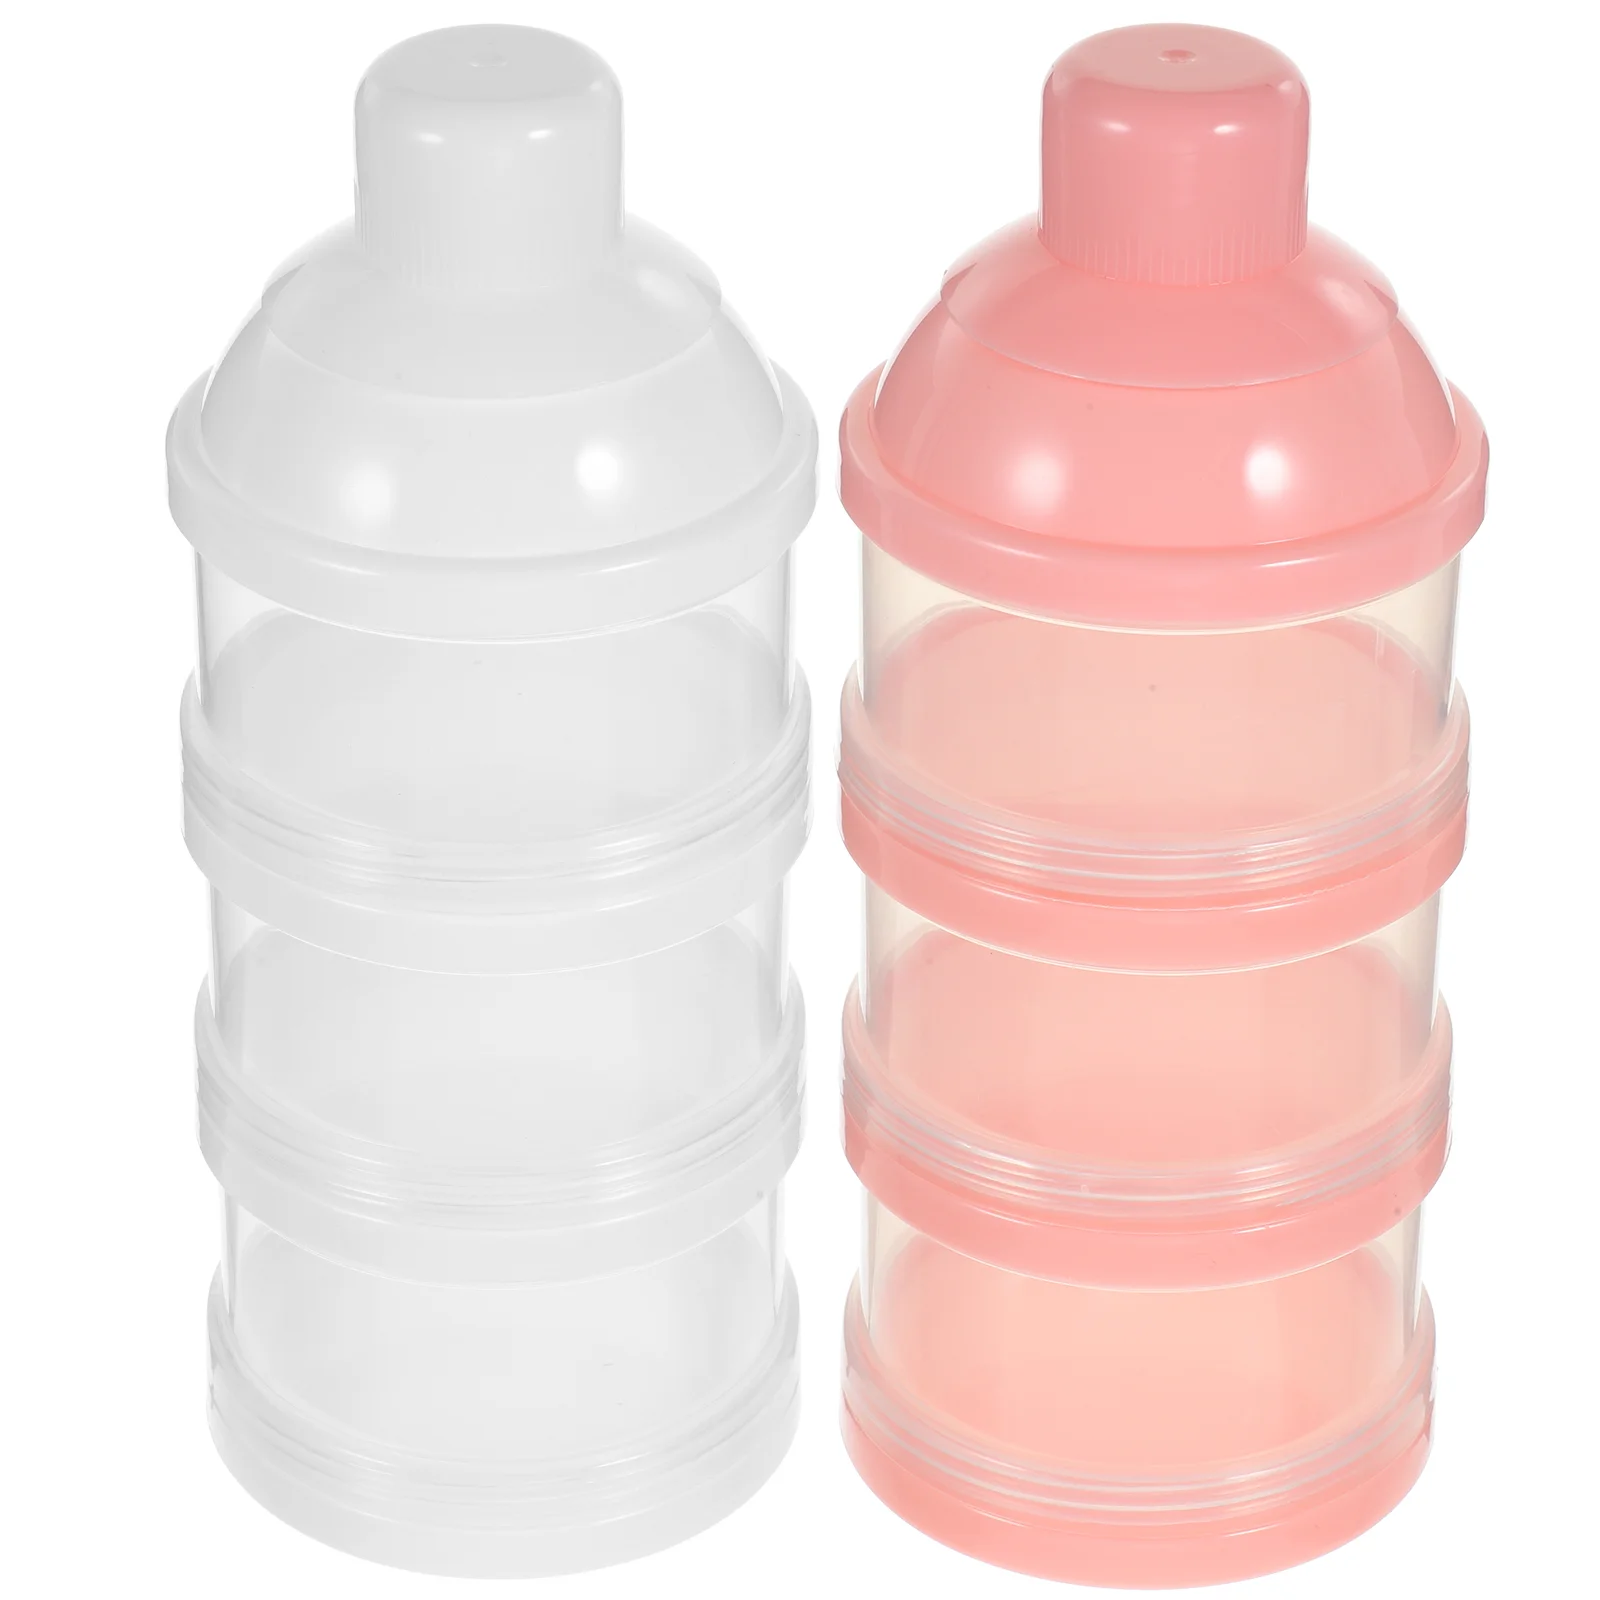 https://ae01.alicdn.com/kf/Sa66999cde3bb4d18b30229afece8d42aK/2-Pcs-Milk-Powder-Box-Food-Supplement-3-layer-Formula-Dispenser-Babies-Baby-Holder-Case-Travel.jpg